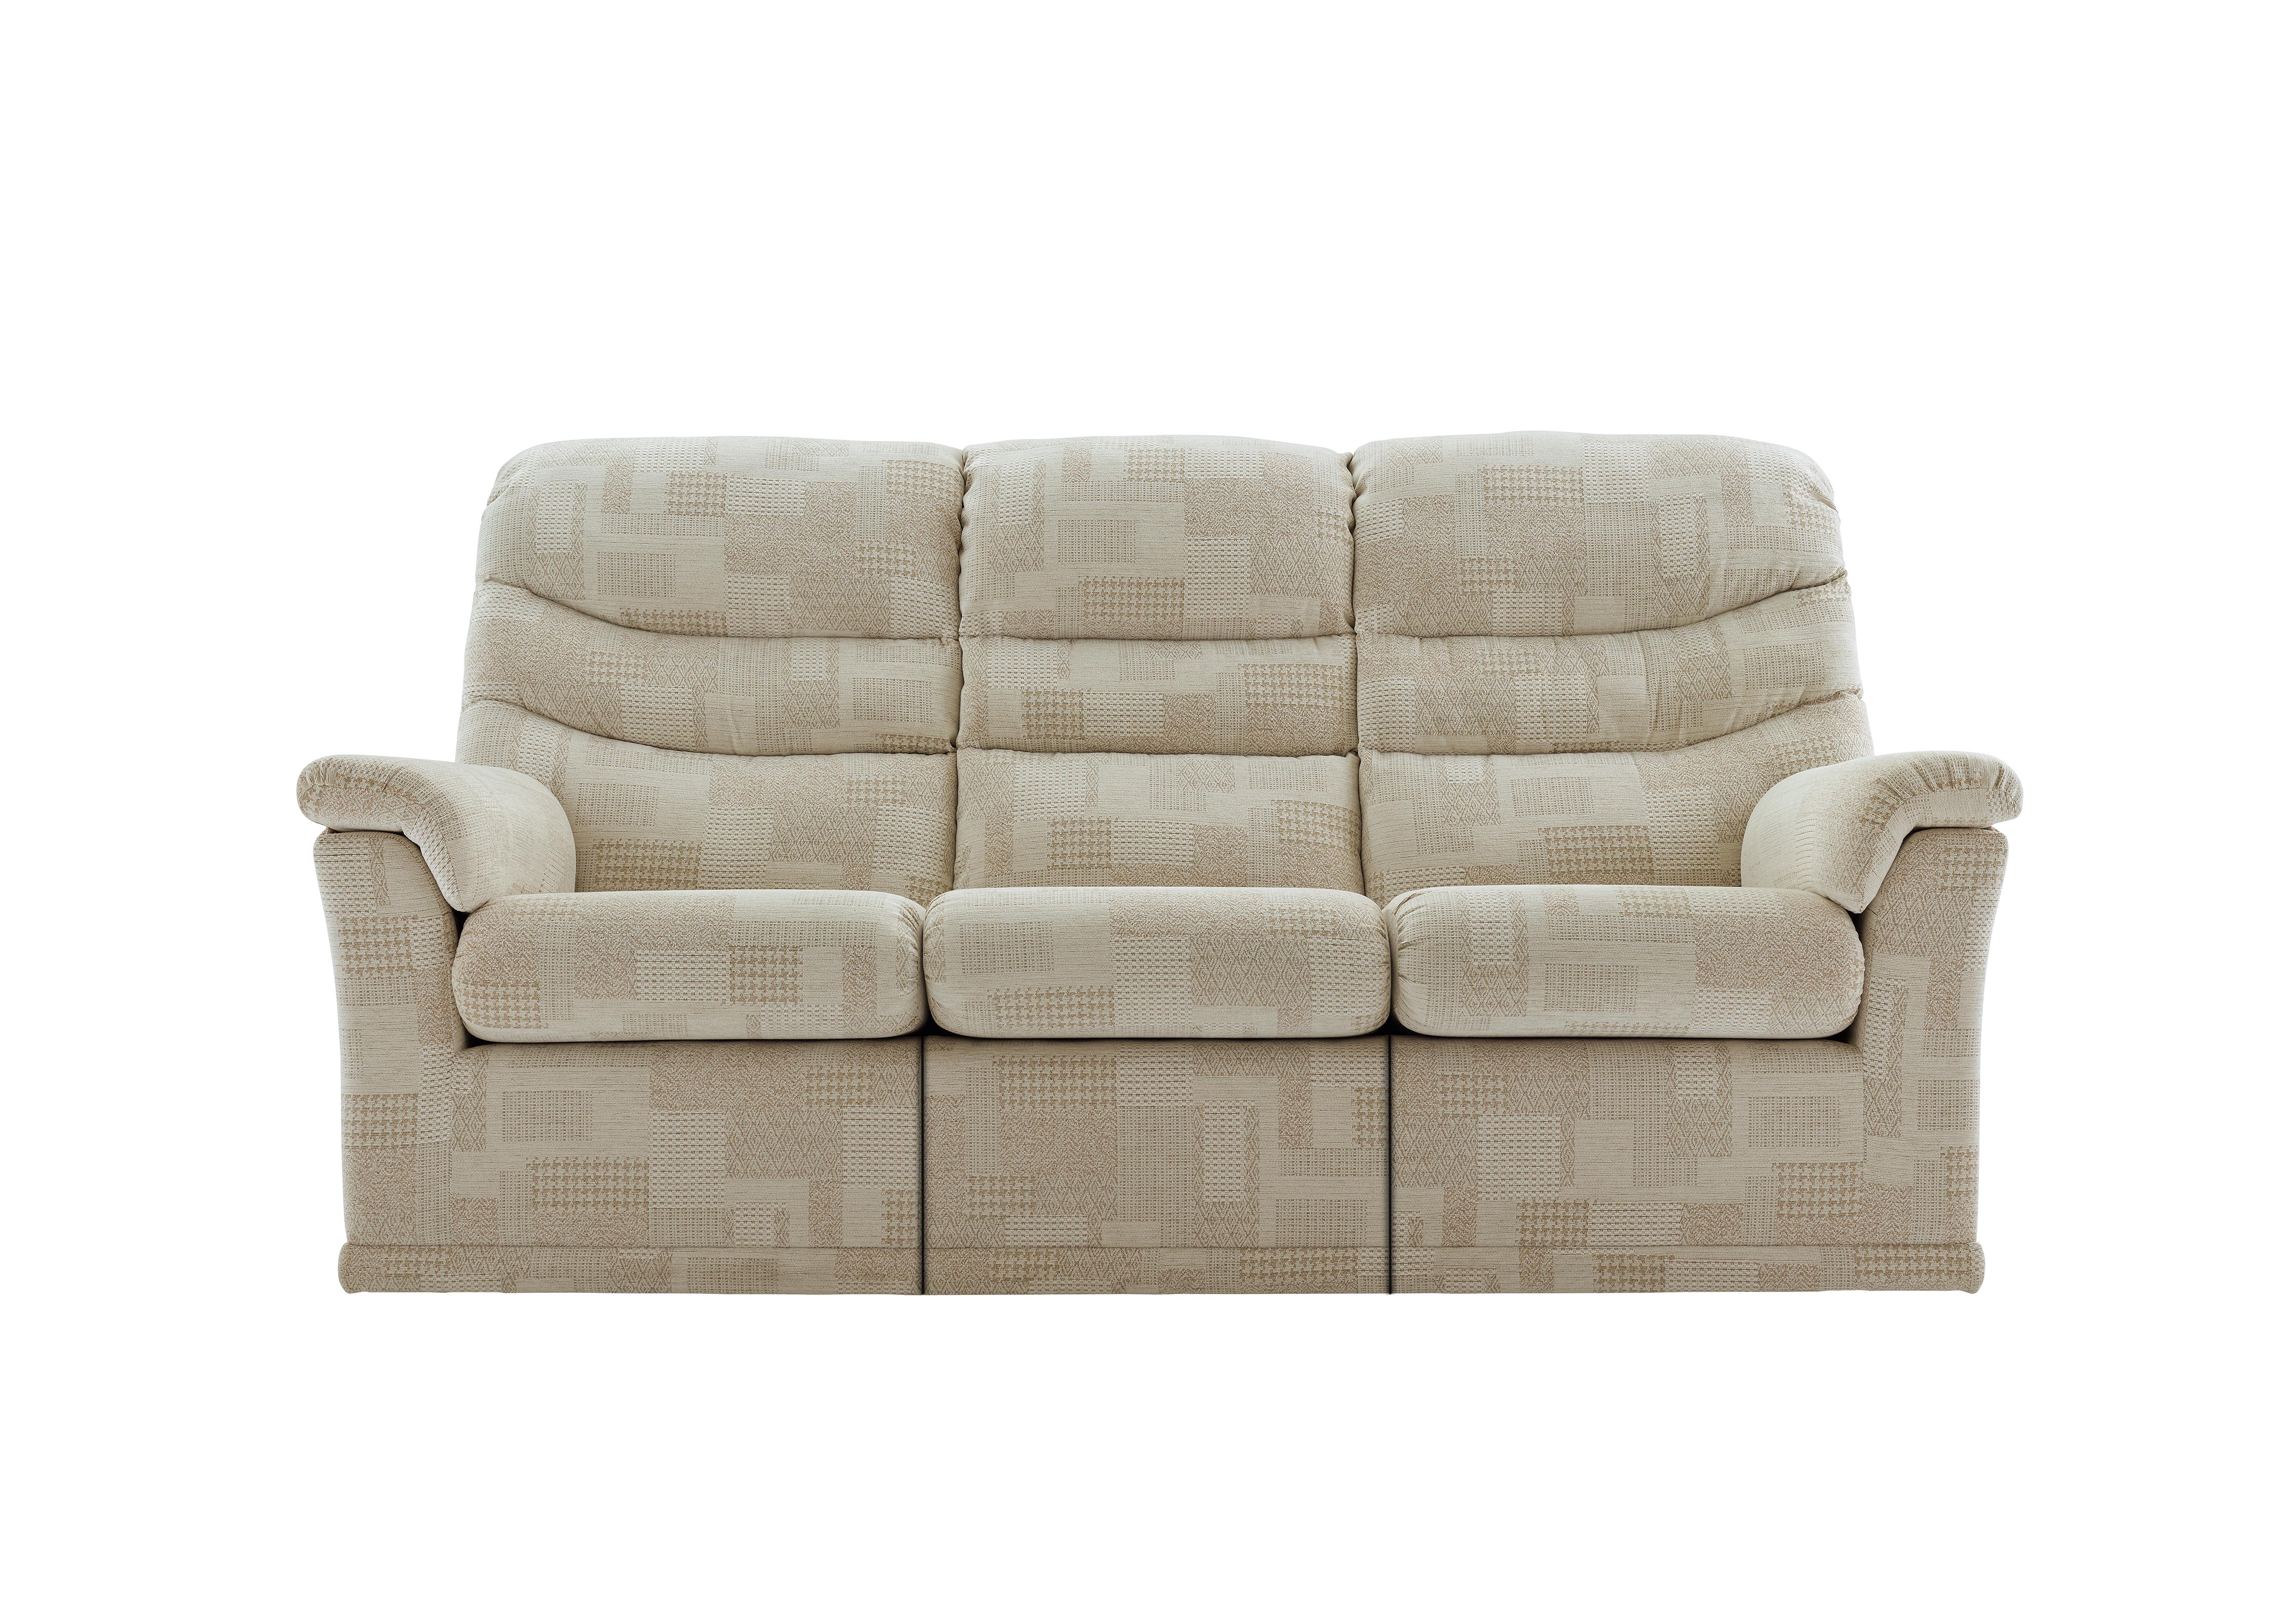 Malvern 3 Seater Fabric Sofa in B430 Lydia Multi on Furniture Village